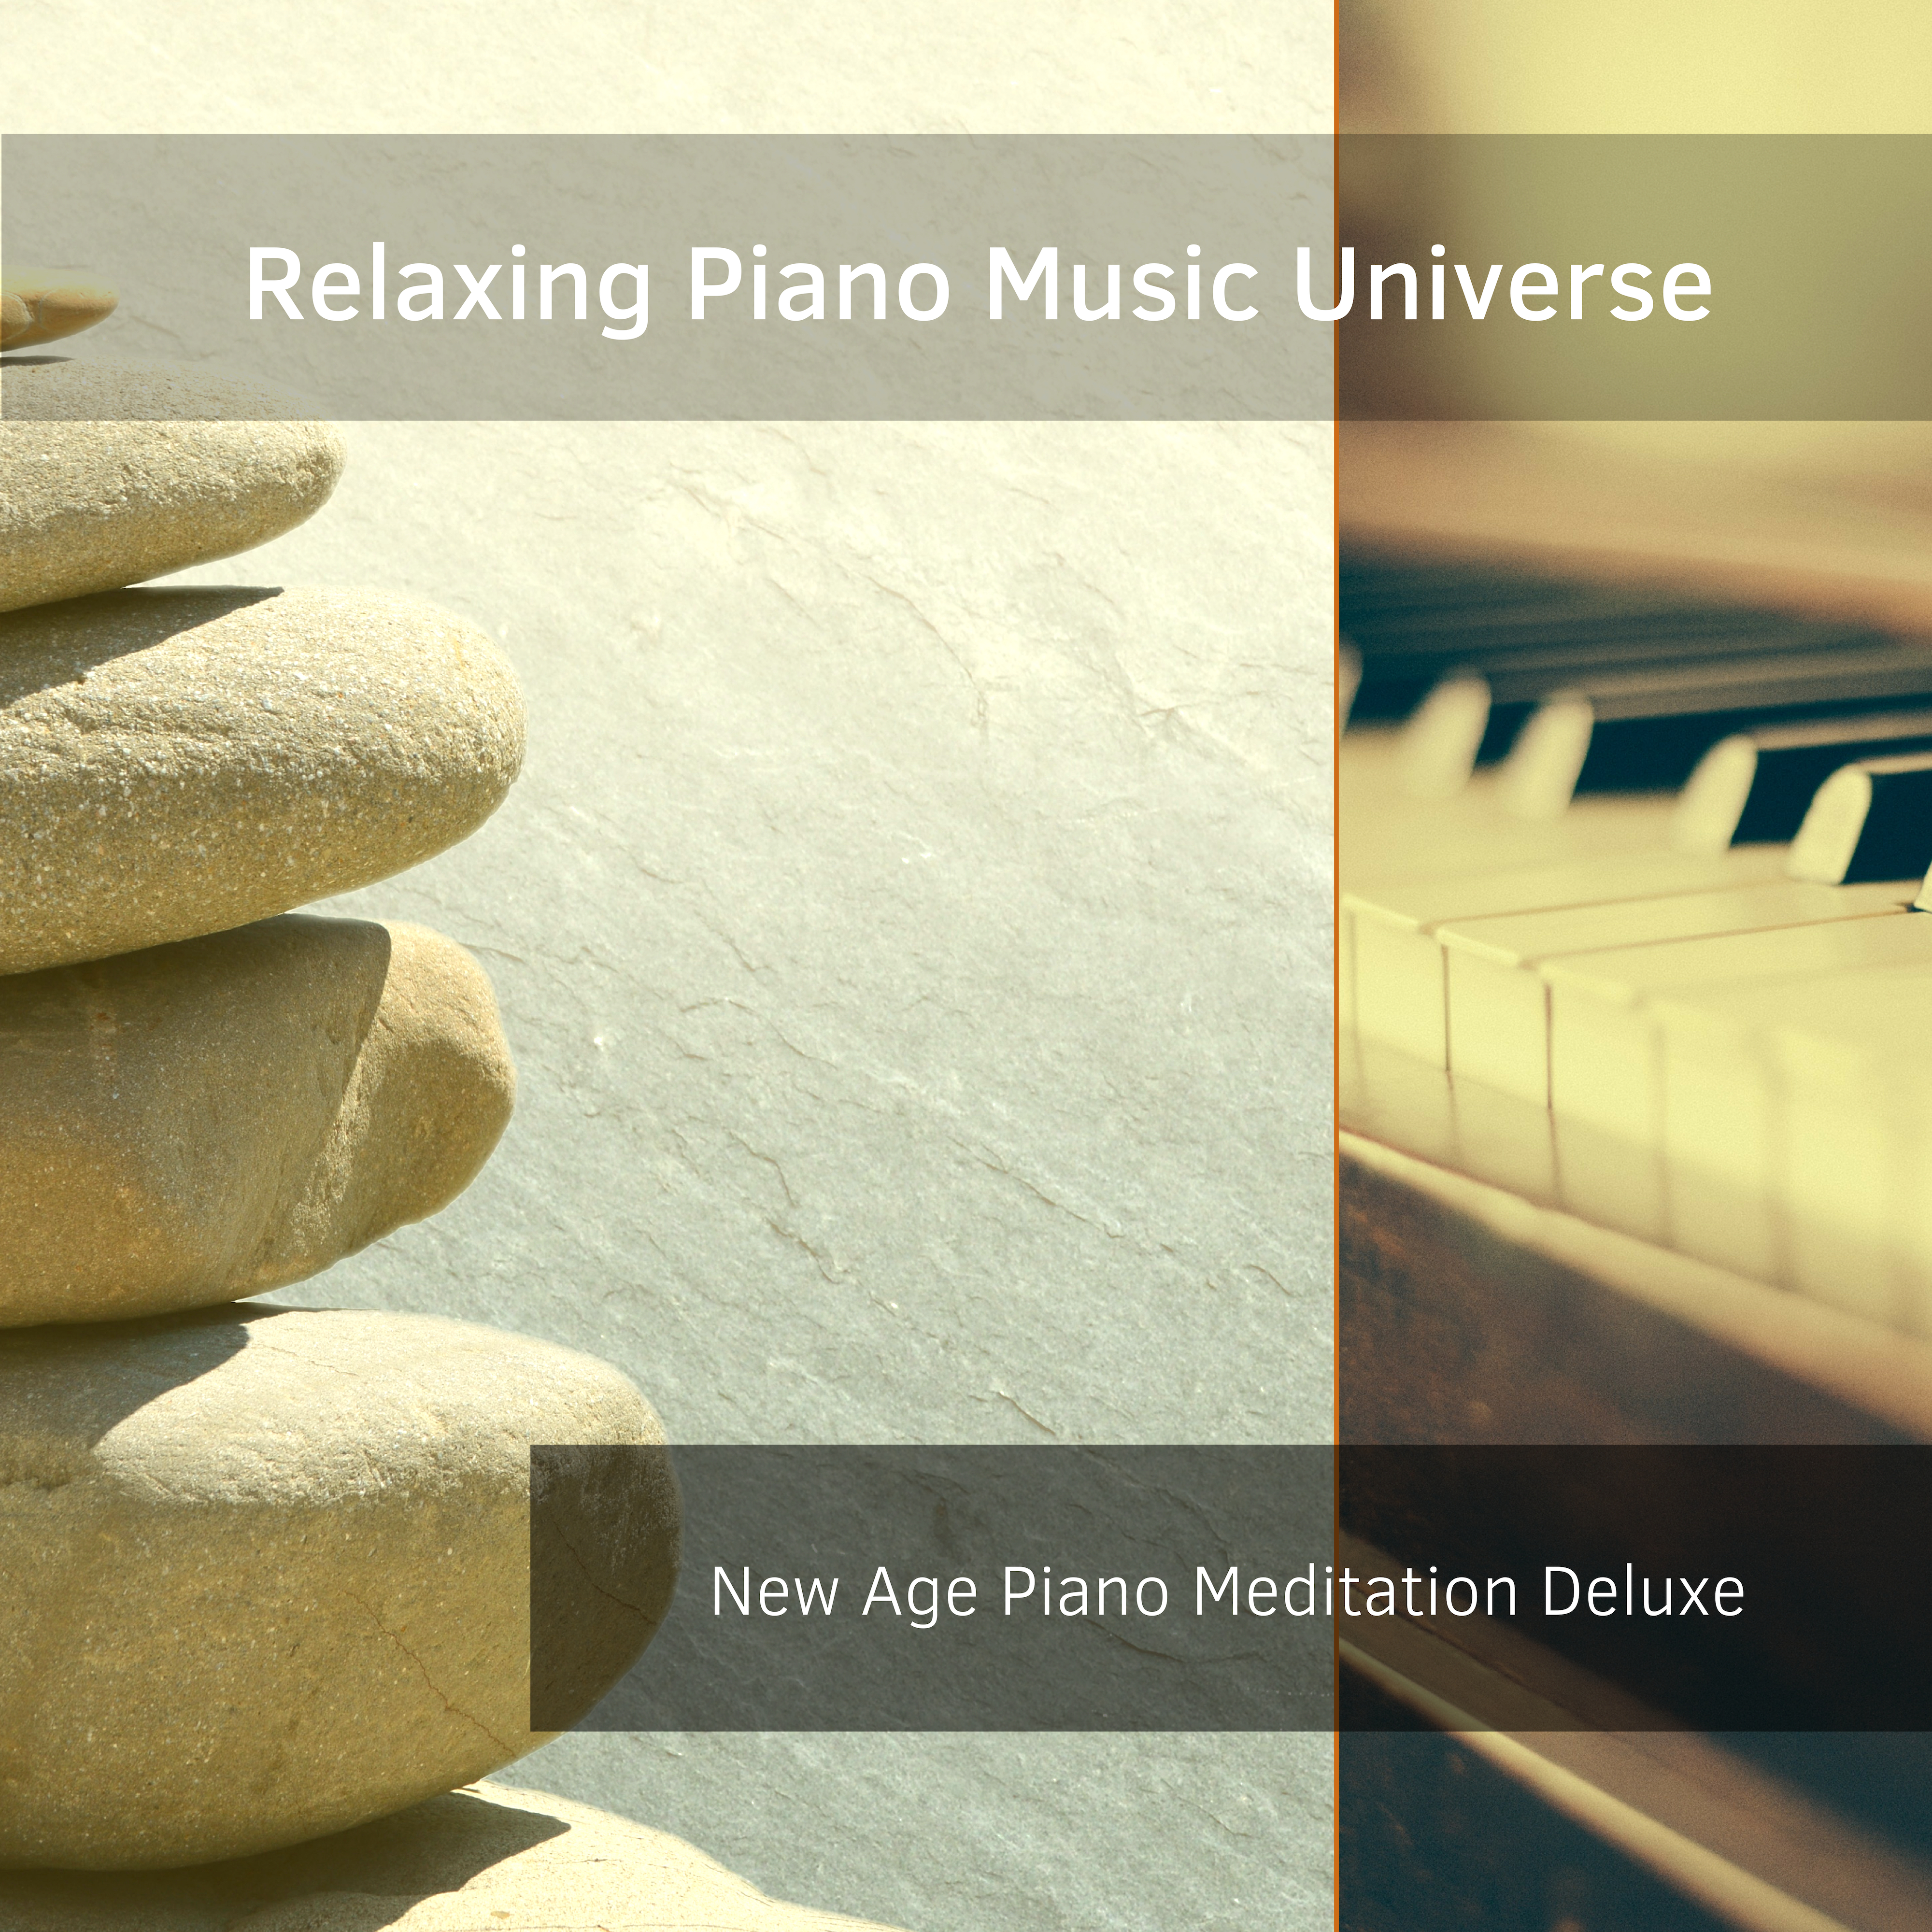 Captivating Instrumental Music for Deluxe Meditation